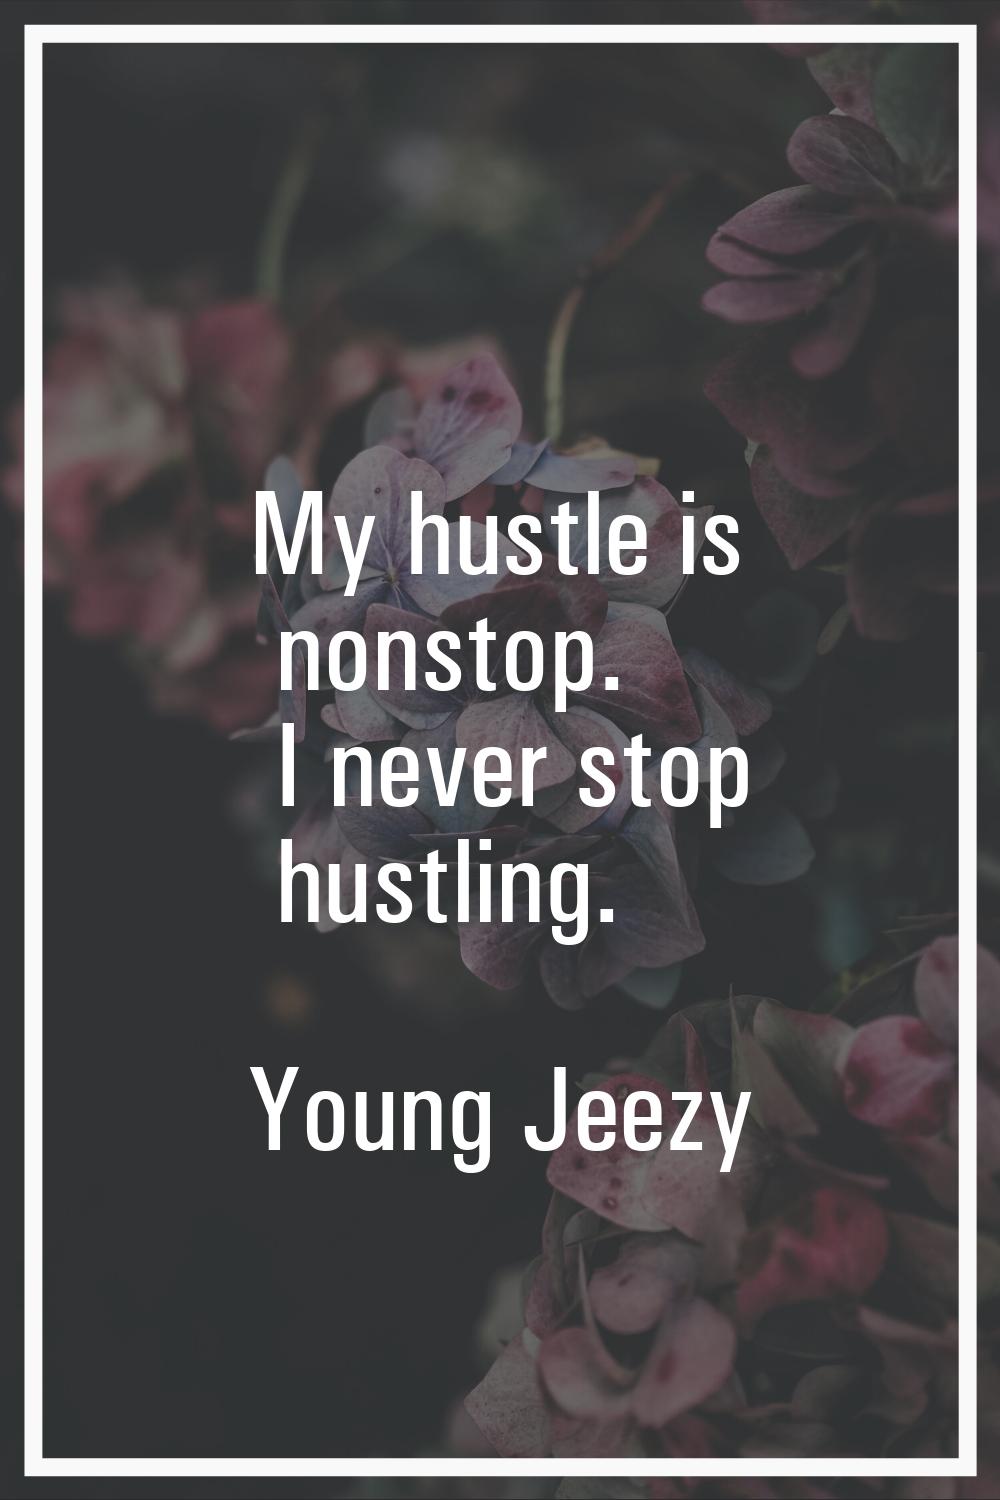 My hustle is nonstop. I never stop hustling.